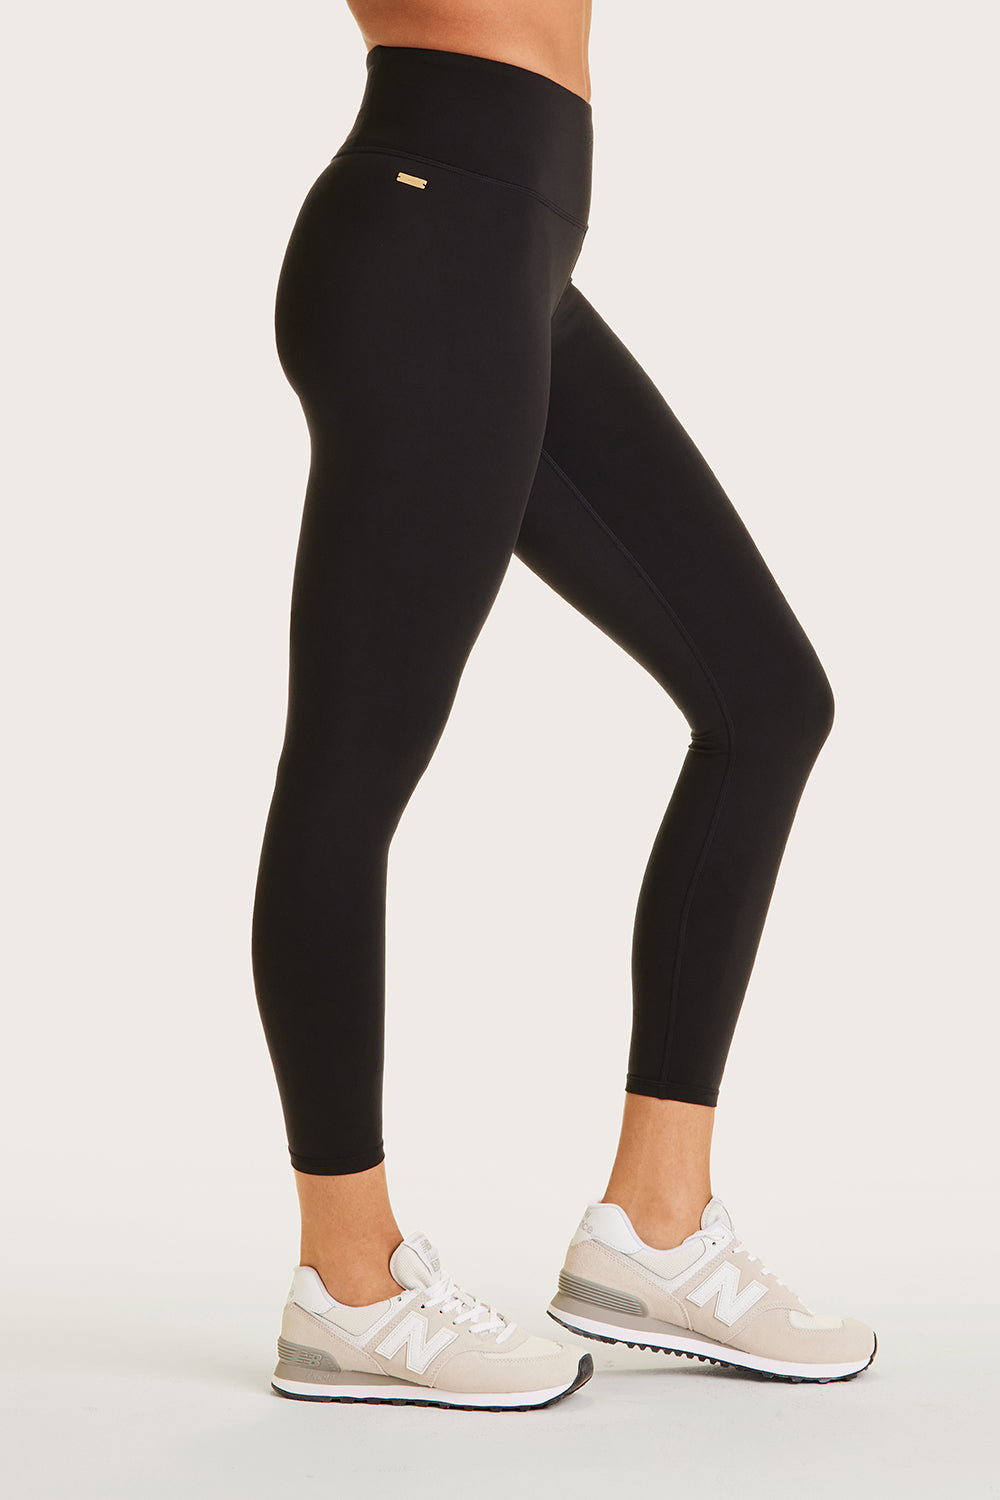 Buy Nike Women's Dri-FIT One Mid-Rise Shine Leggings Black in KSA -SSS